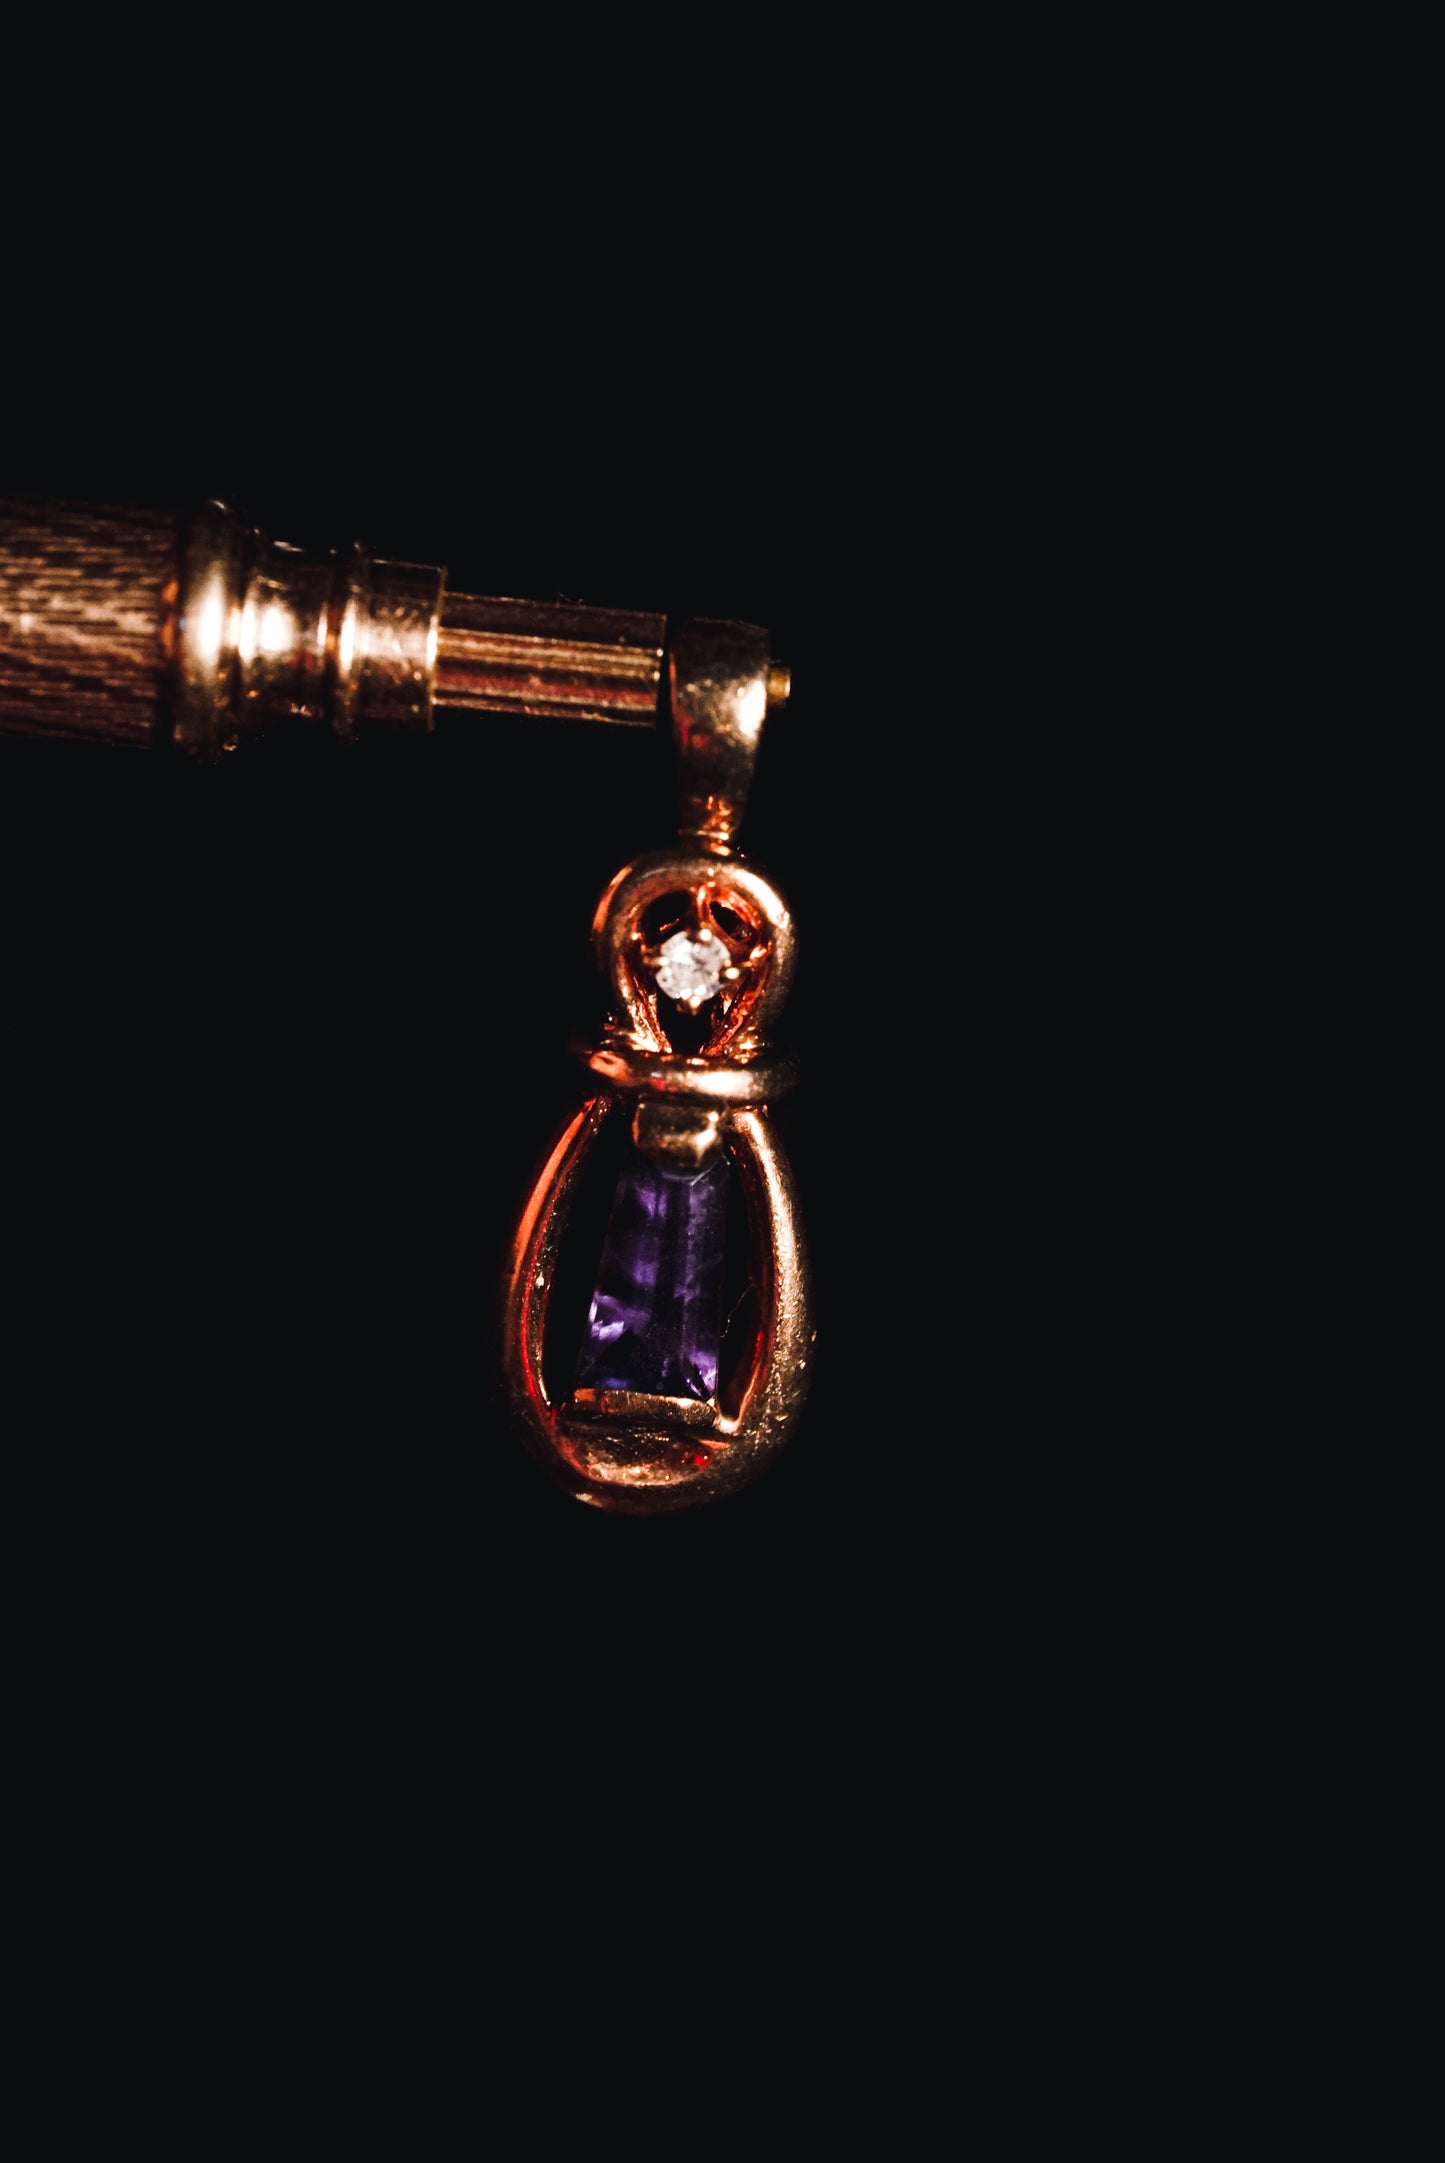 Unusual Diamond Pendant with Amethyst